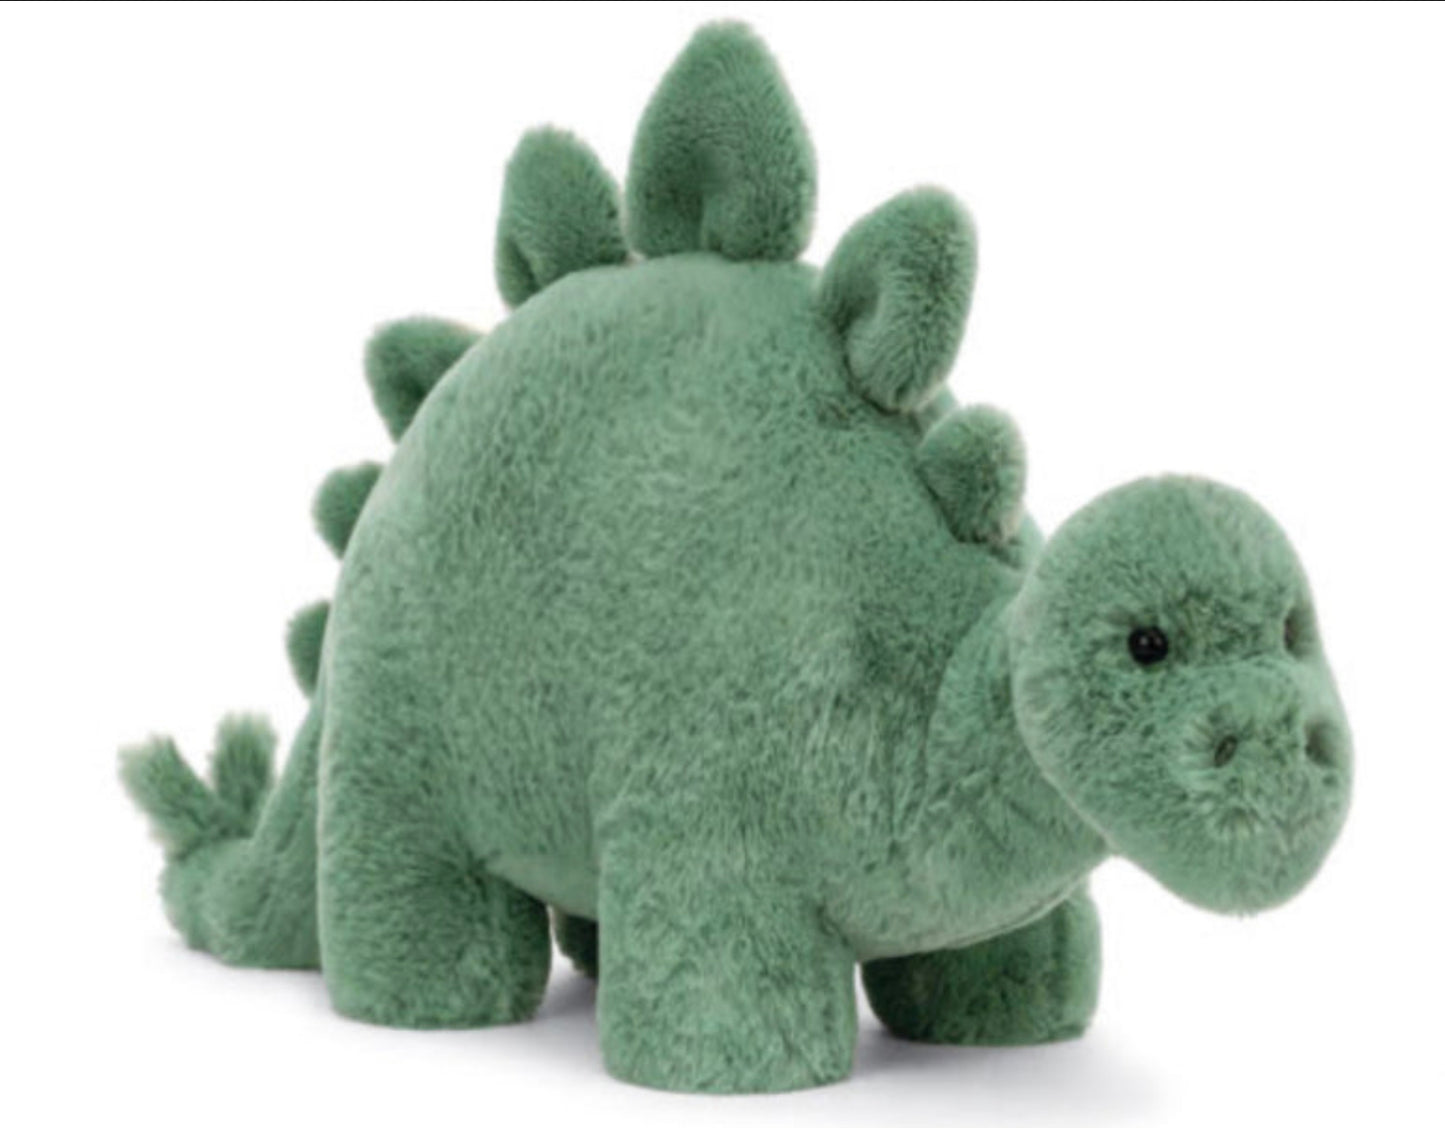 Fossilly Stegosaurus Plush Toy